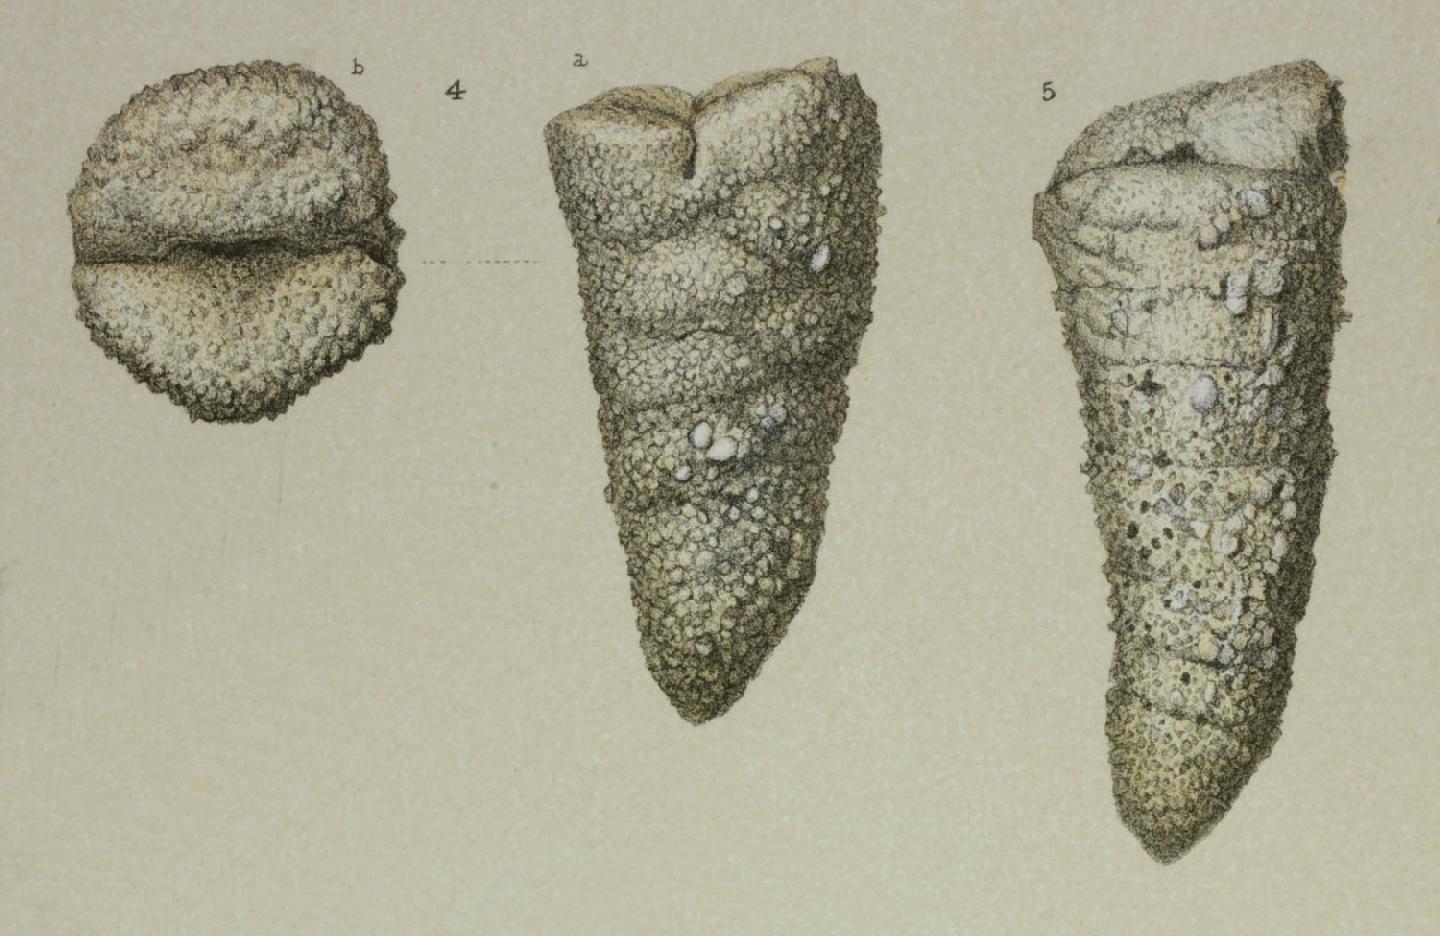 To NHMUK collection (Textularia turris Orbigny, 1840; NHMUK:ecatalogue:3093311)